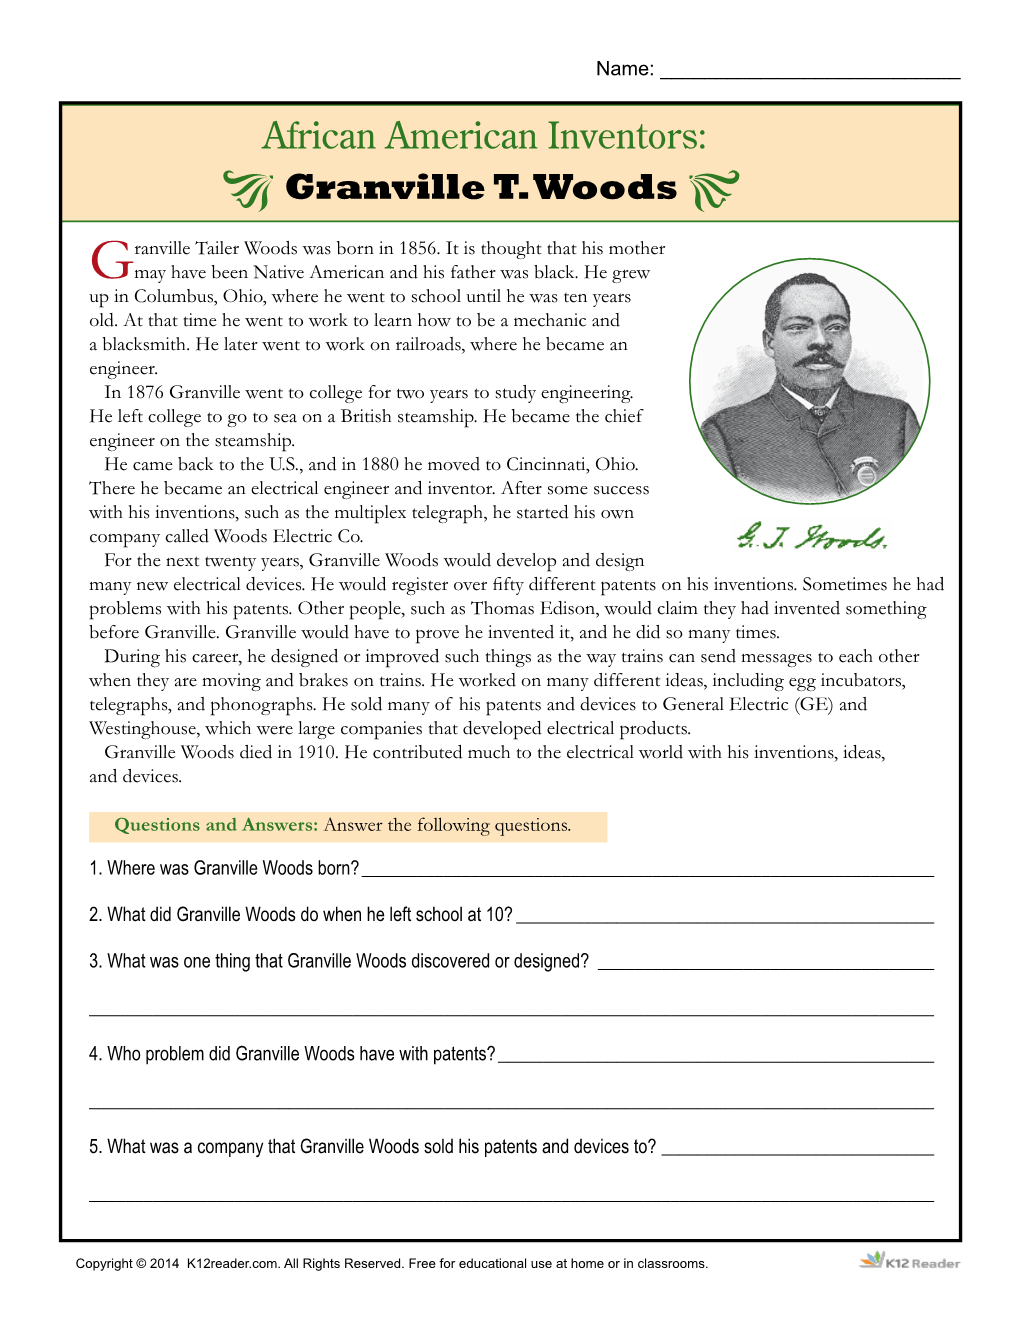 African American Inventors: Granville T. Woods